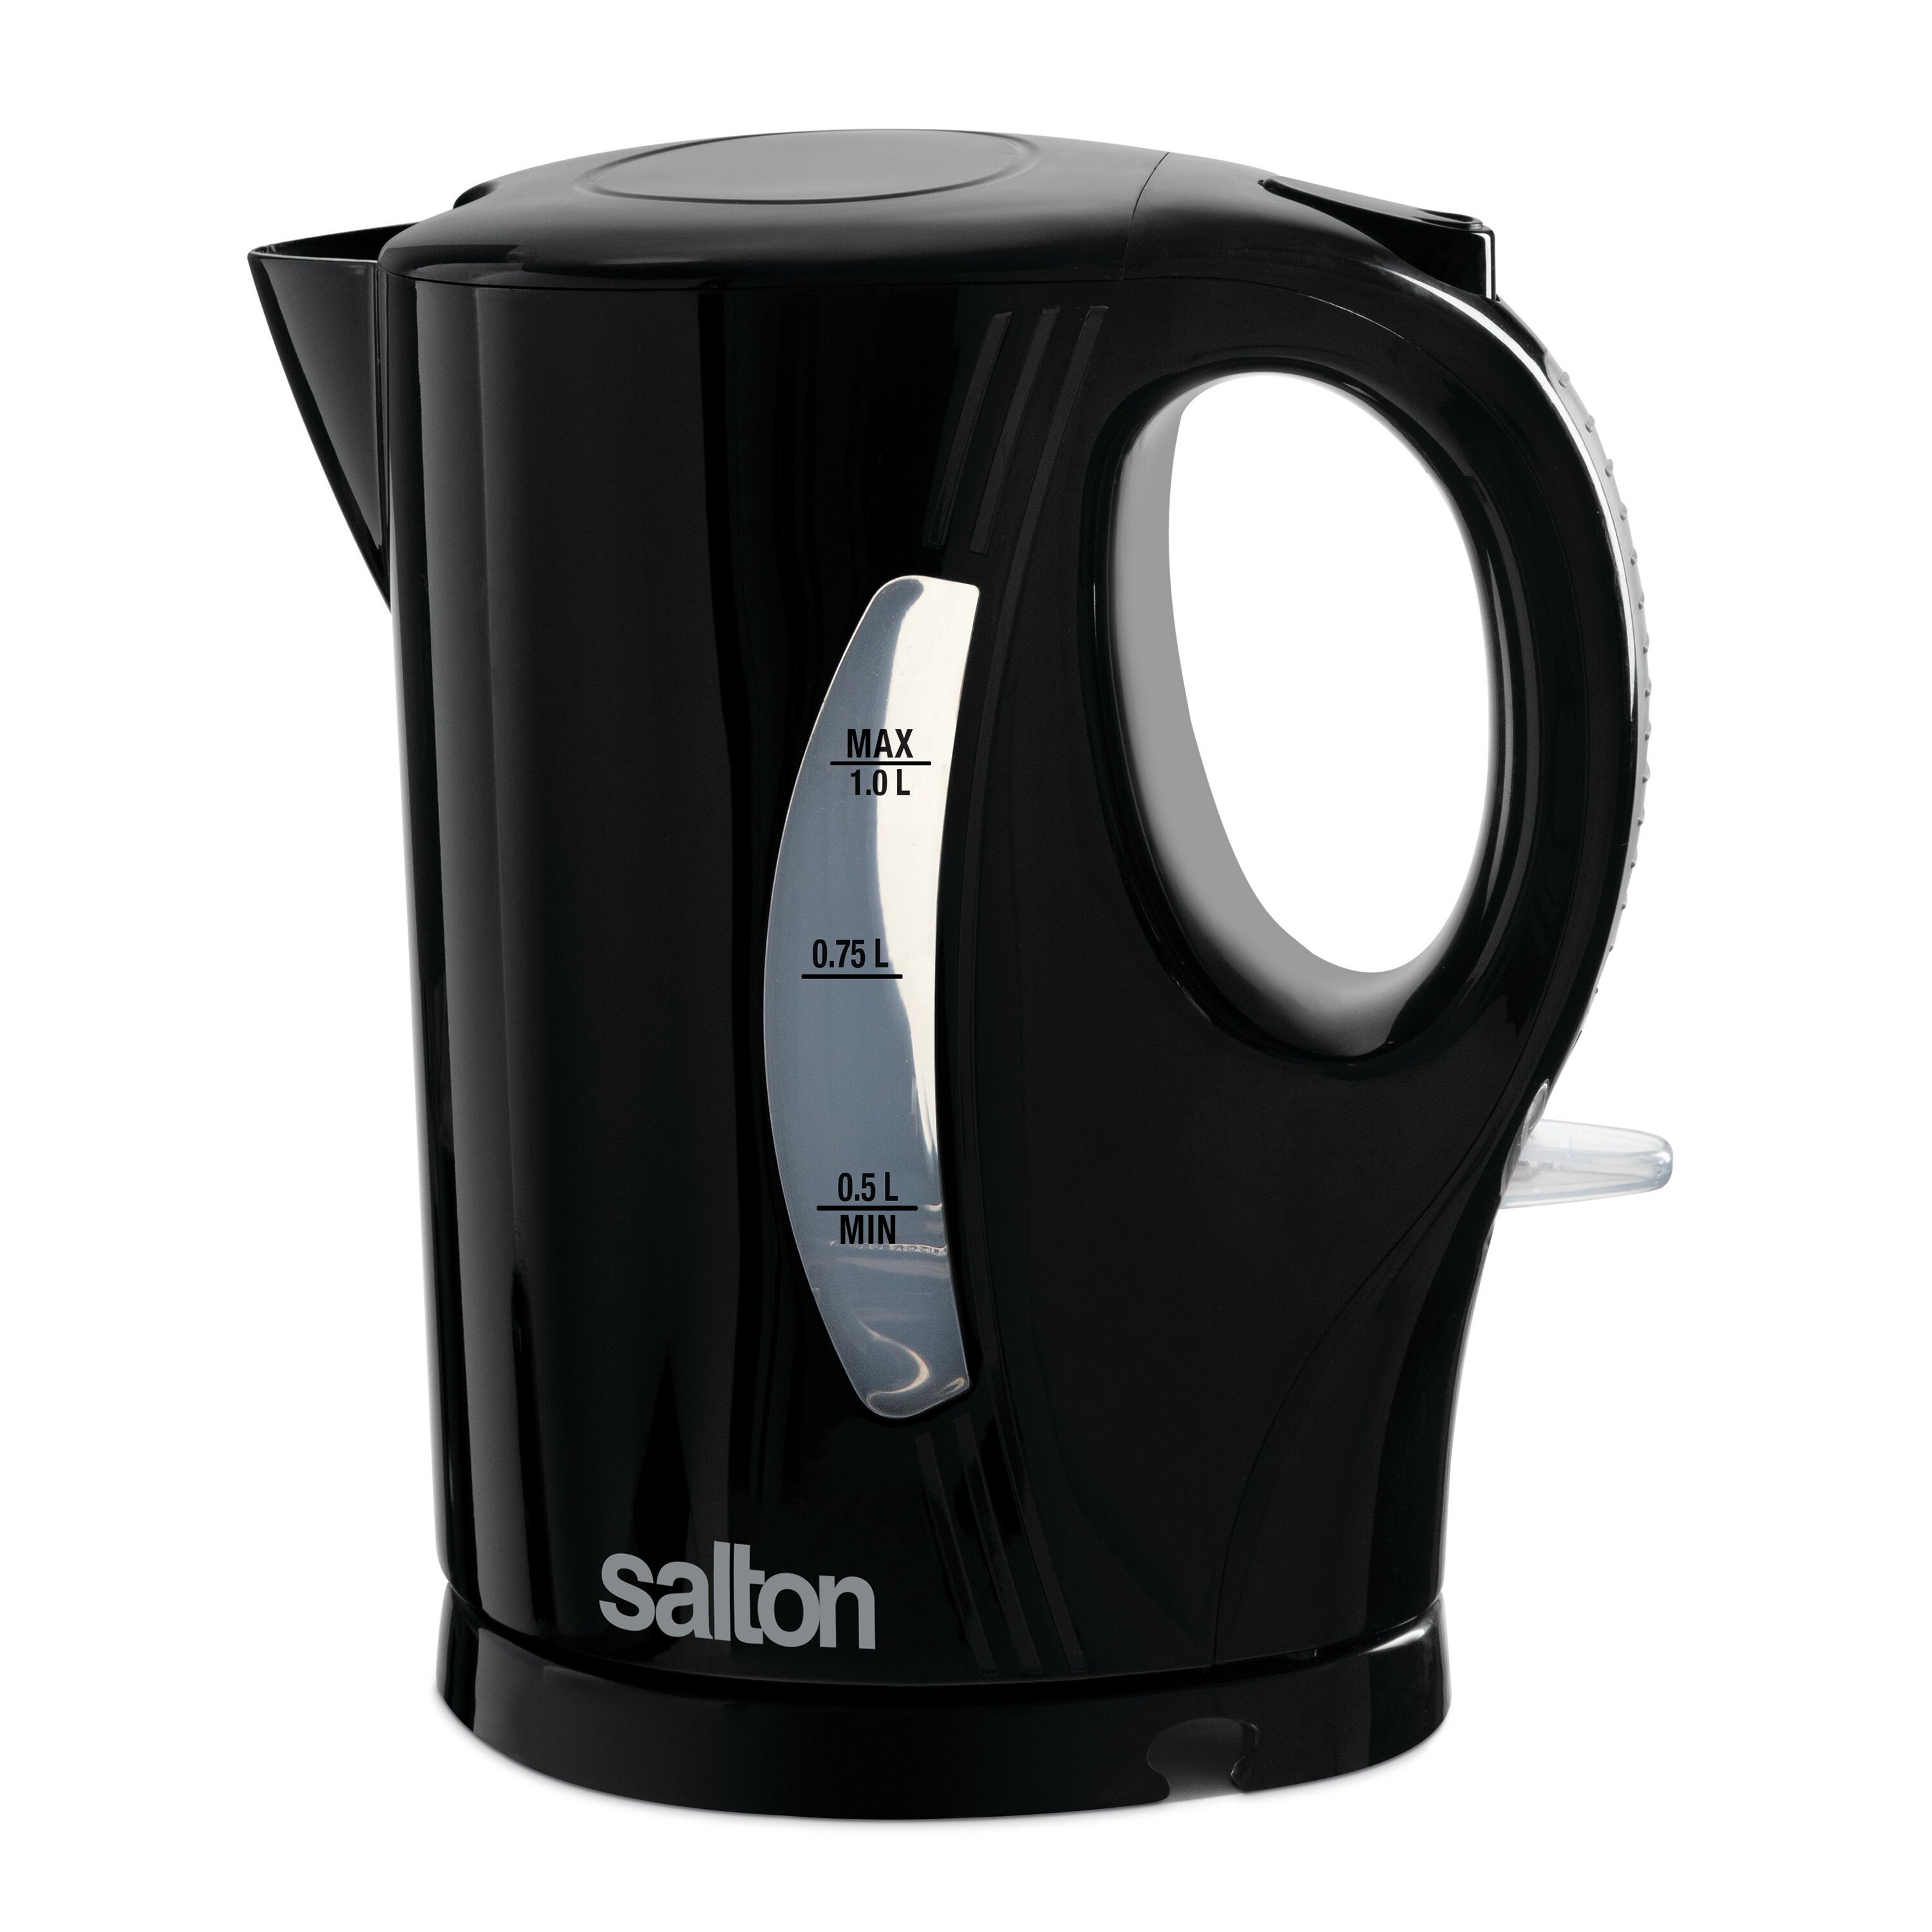 Salton Coffee Tea Warmer, 1 Cup/Mug, White